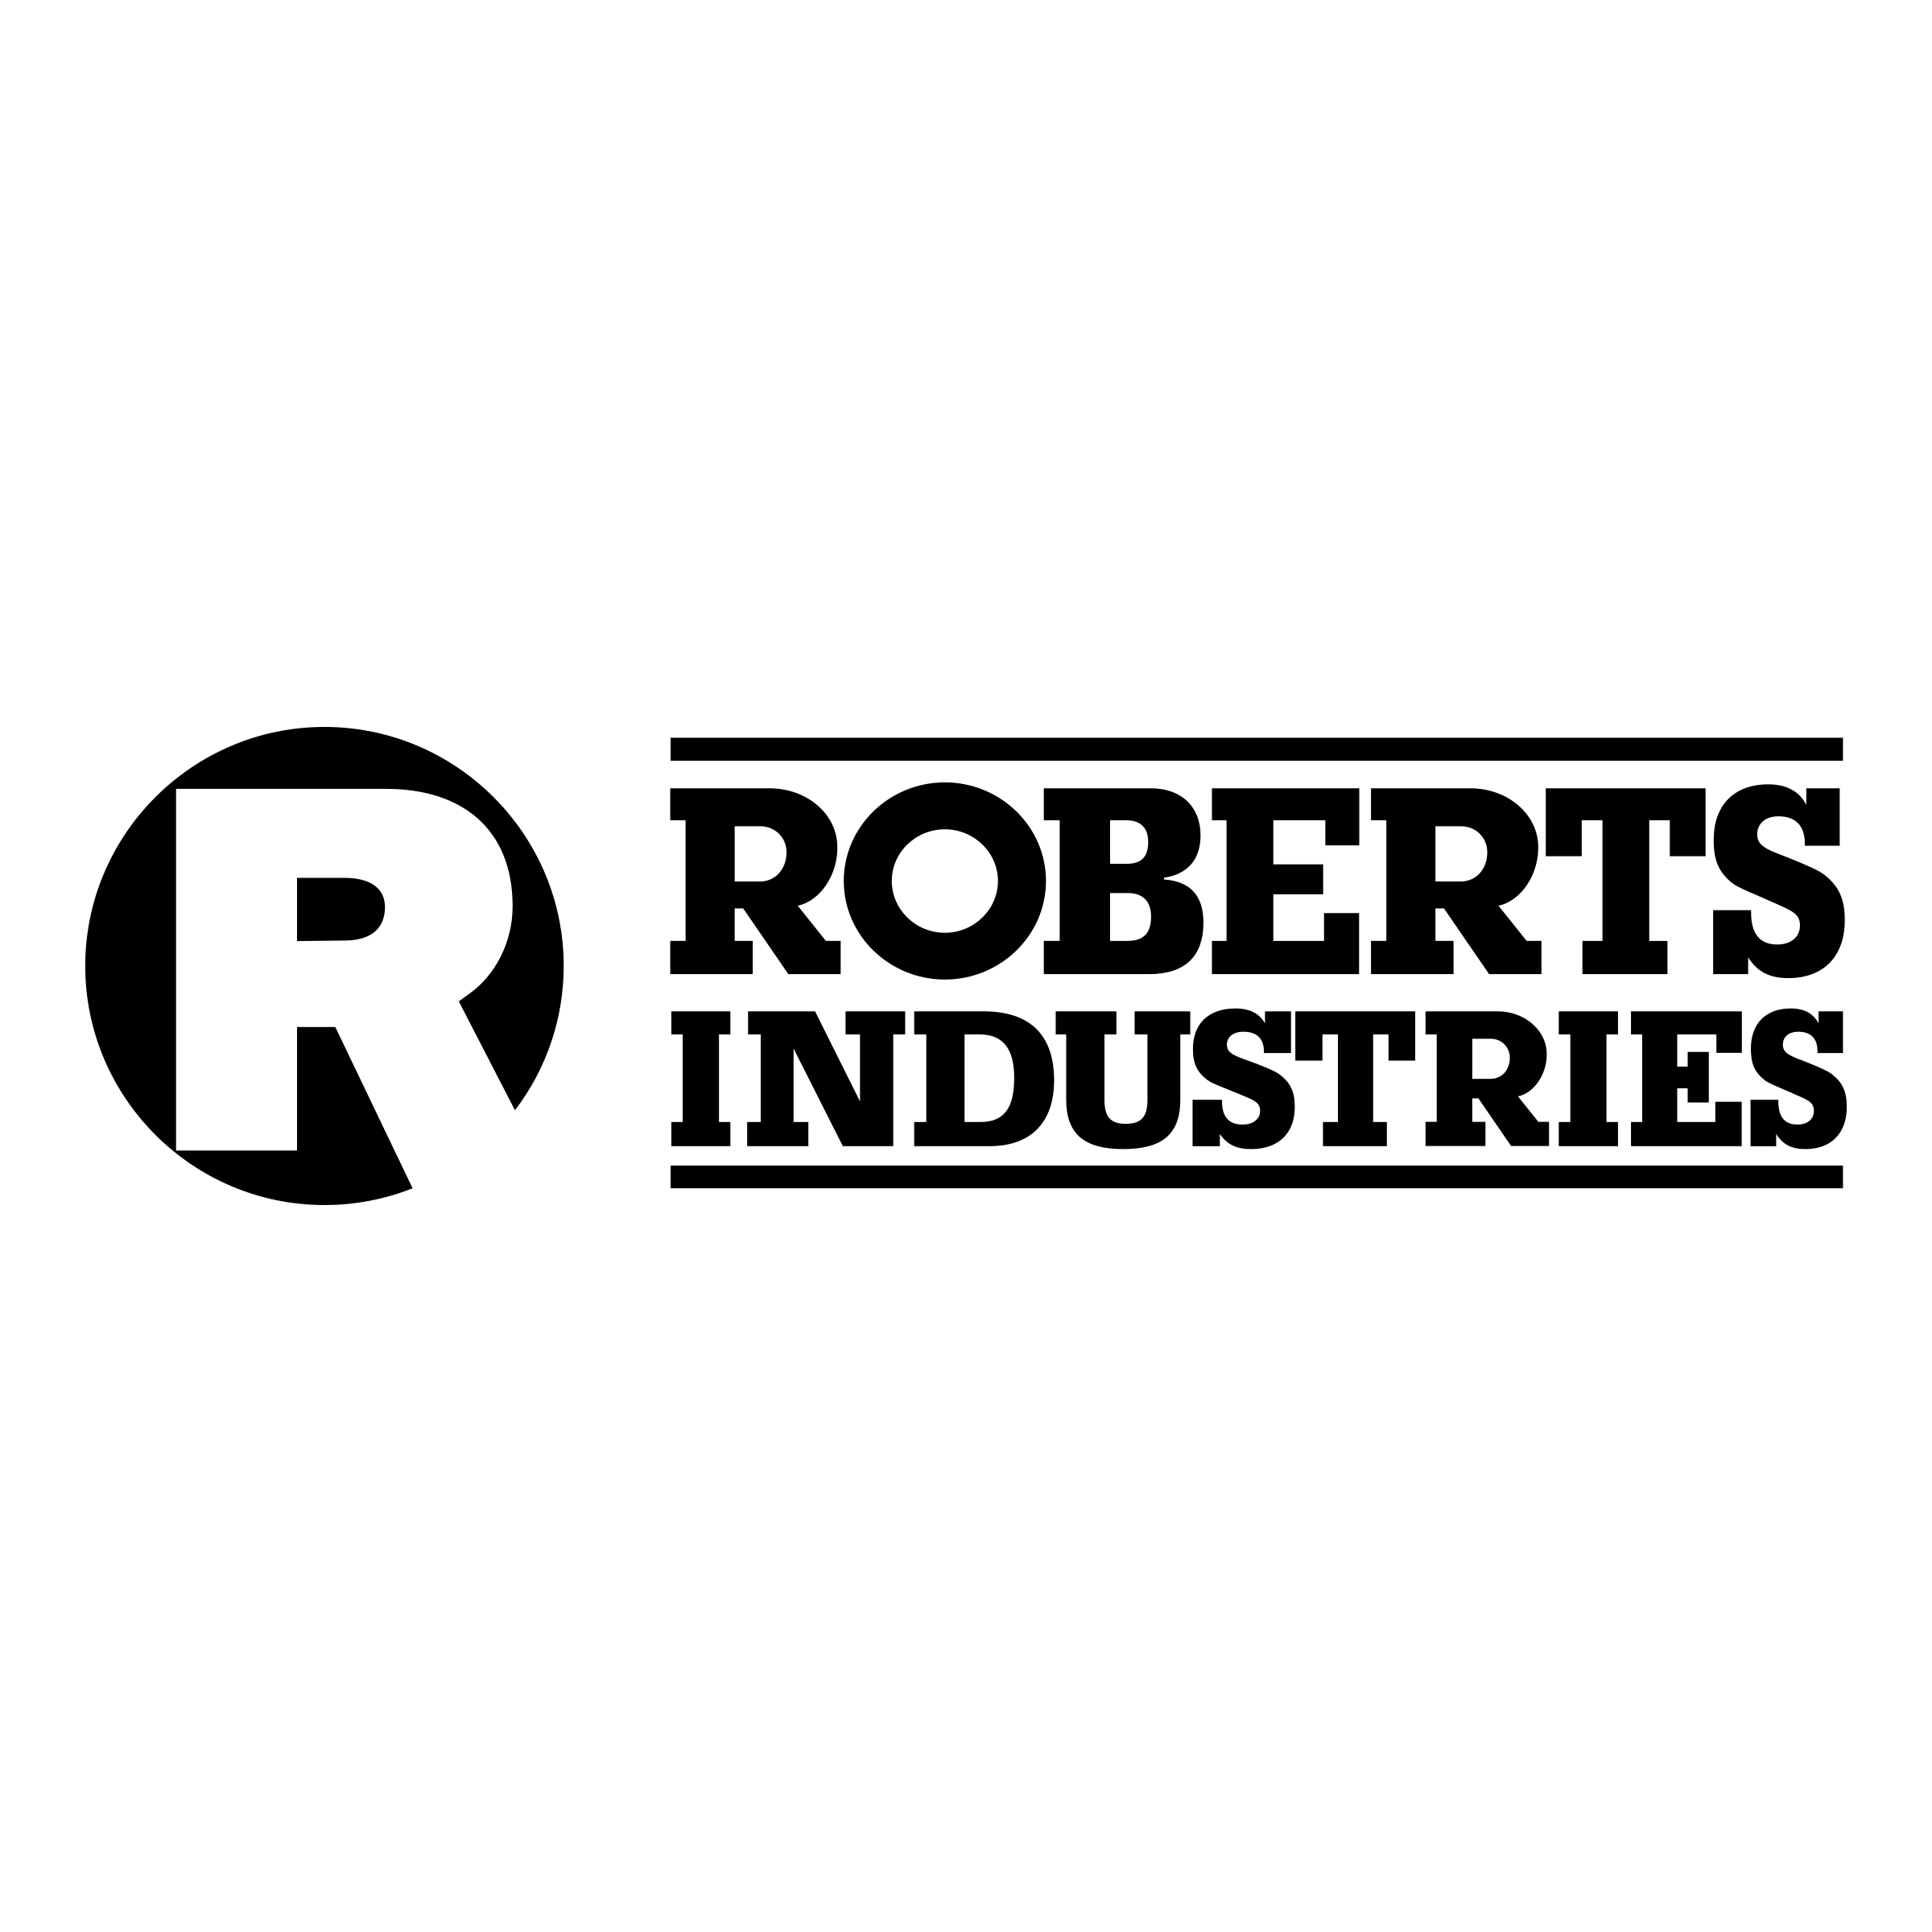 Roberts Logo - Roberts Industries Logo PNG Transparent & SVG Vector - Freebie Supply